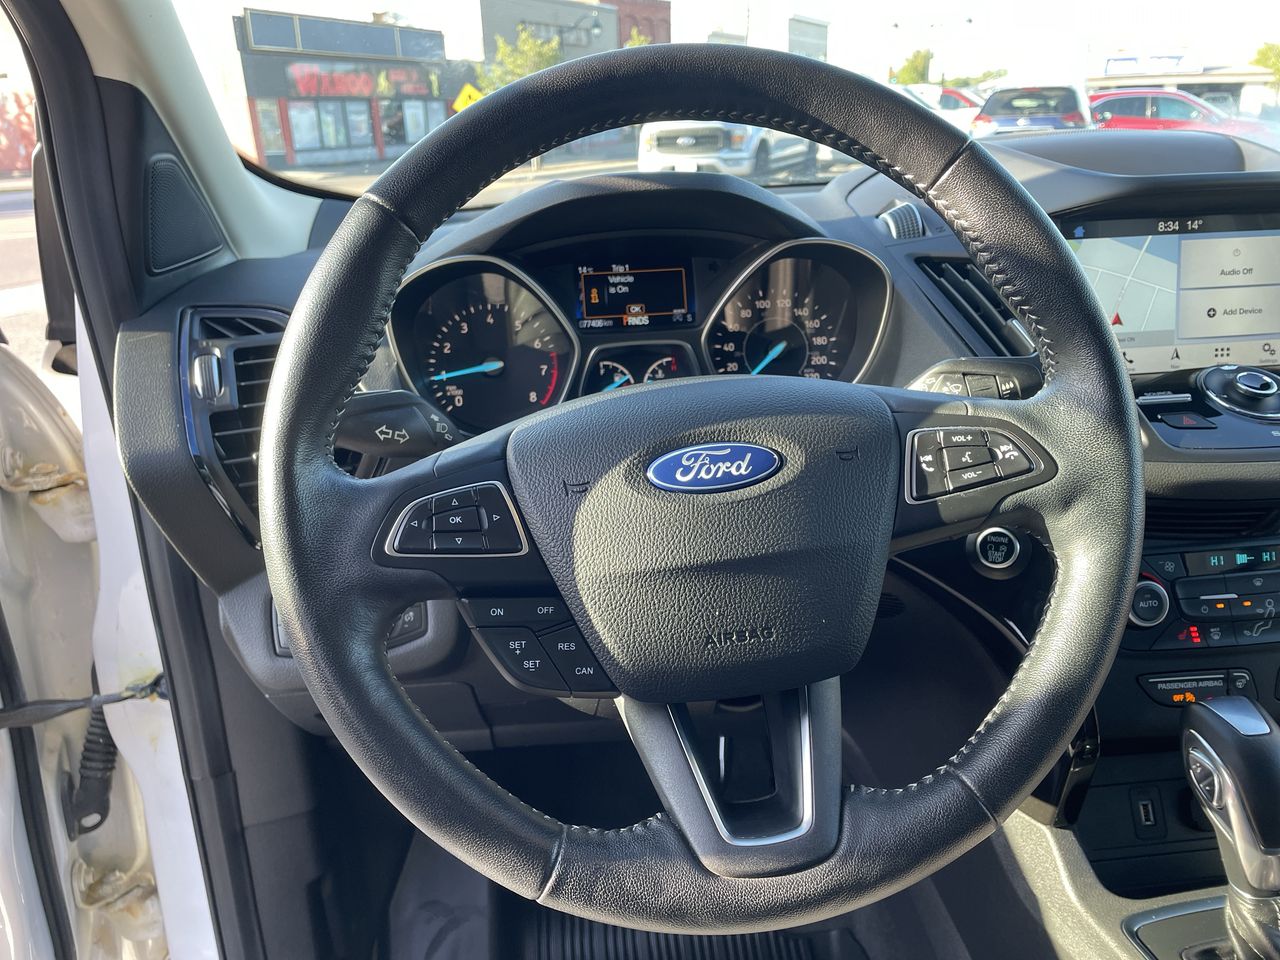 2019 Ford Escape - 21289A Full Image 14